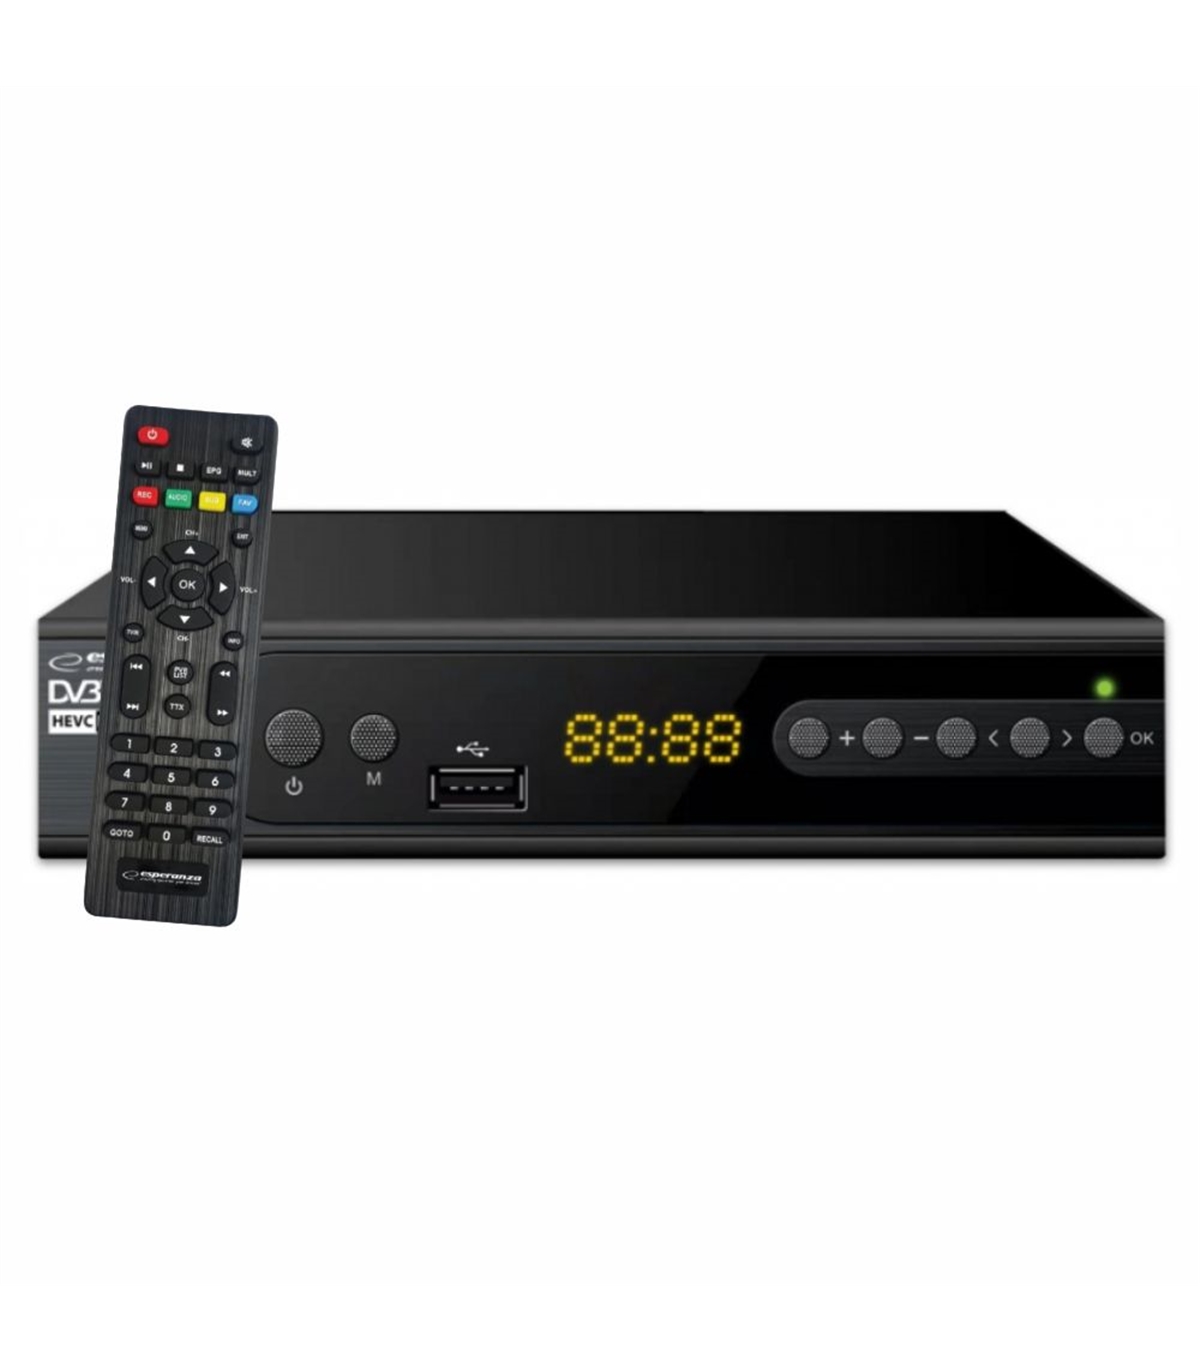 TDT decoder, TDT DVB T2 tuner Full HD /1080p/3D/H.265 HEVC / Dolby / AC3 /  MPEG